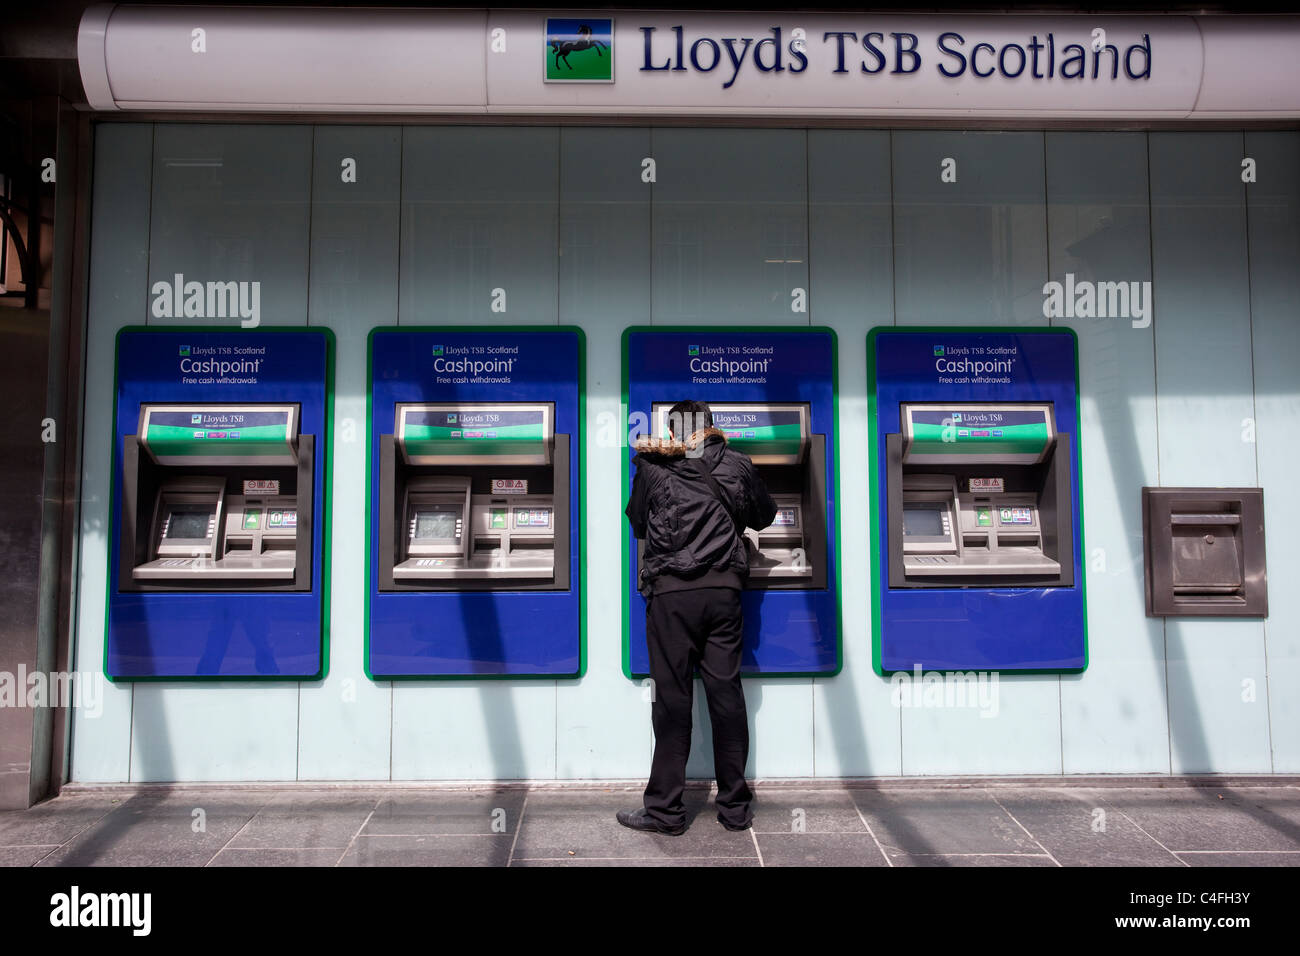 Lloyds TSB Scotland, St Vincent Street, Glasgow. Photo:Jeff Gilbert Stock Photo